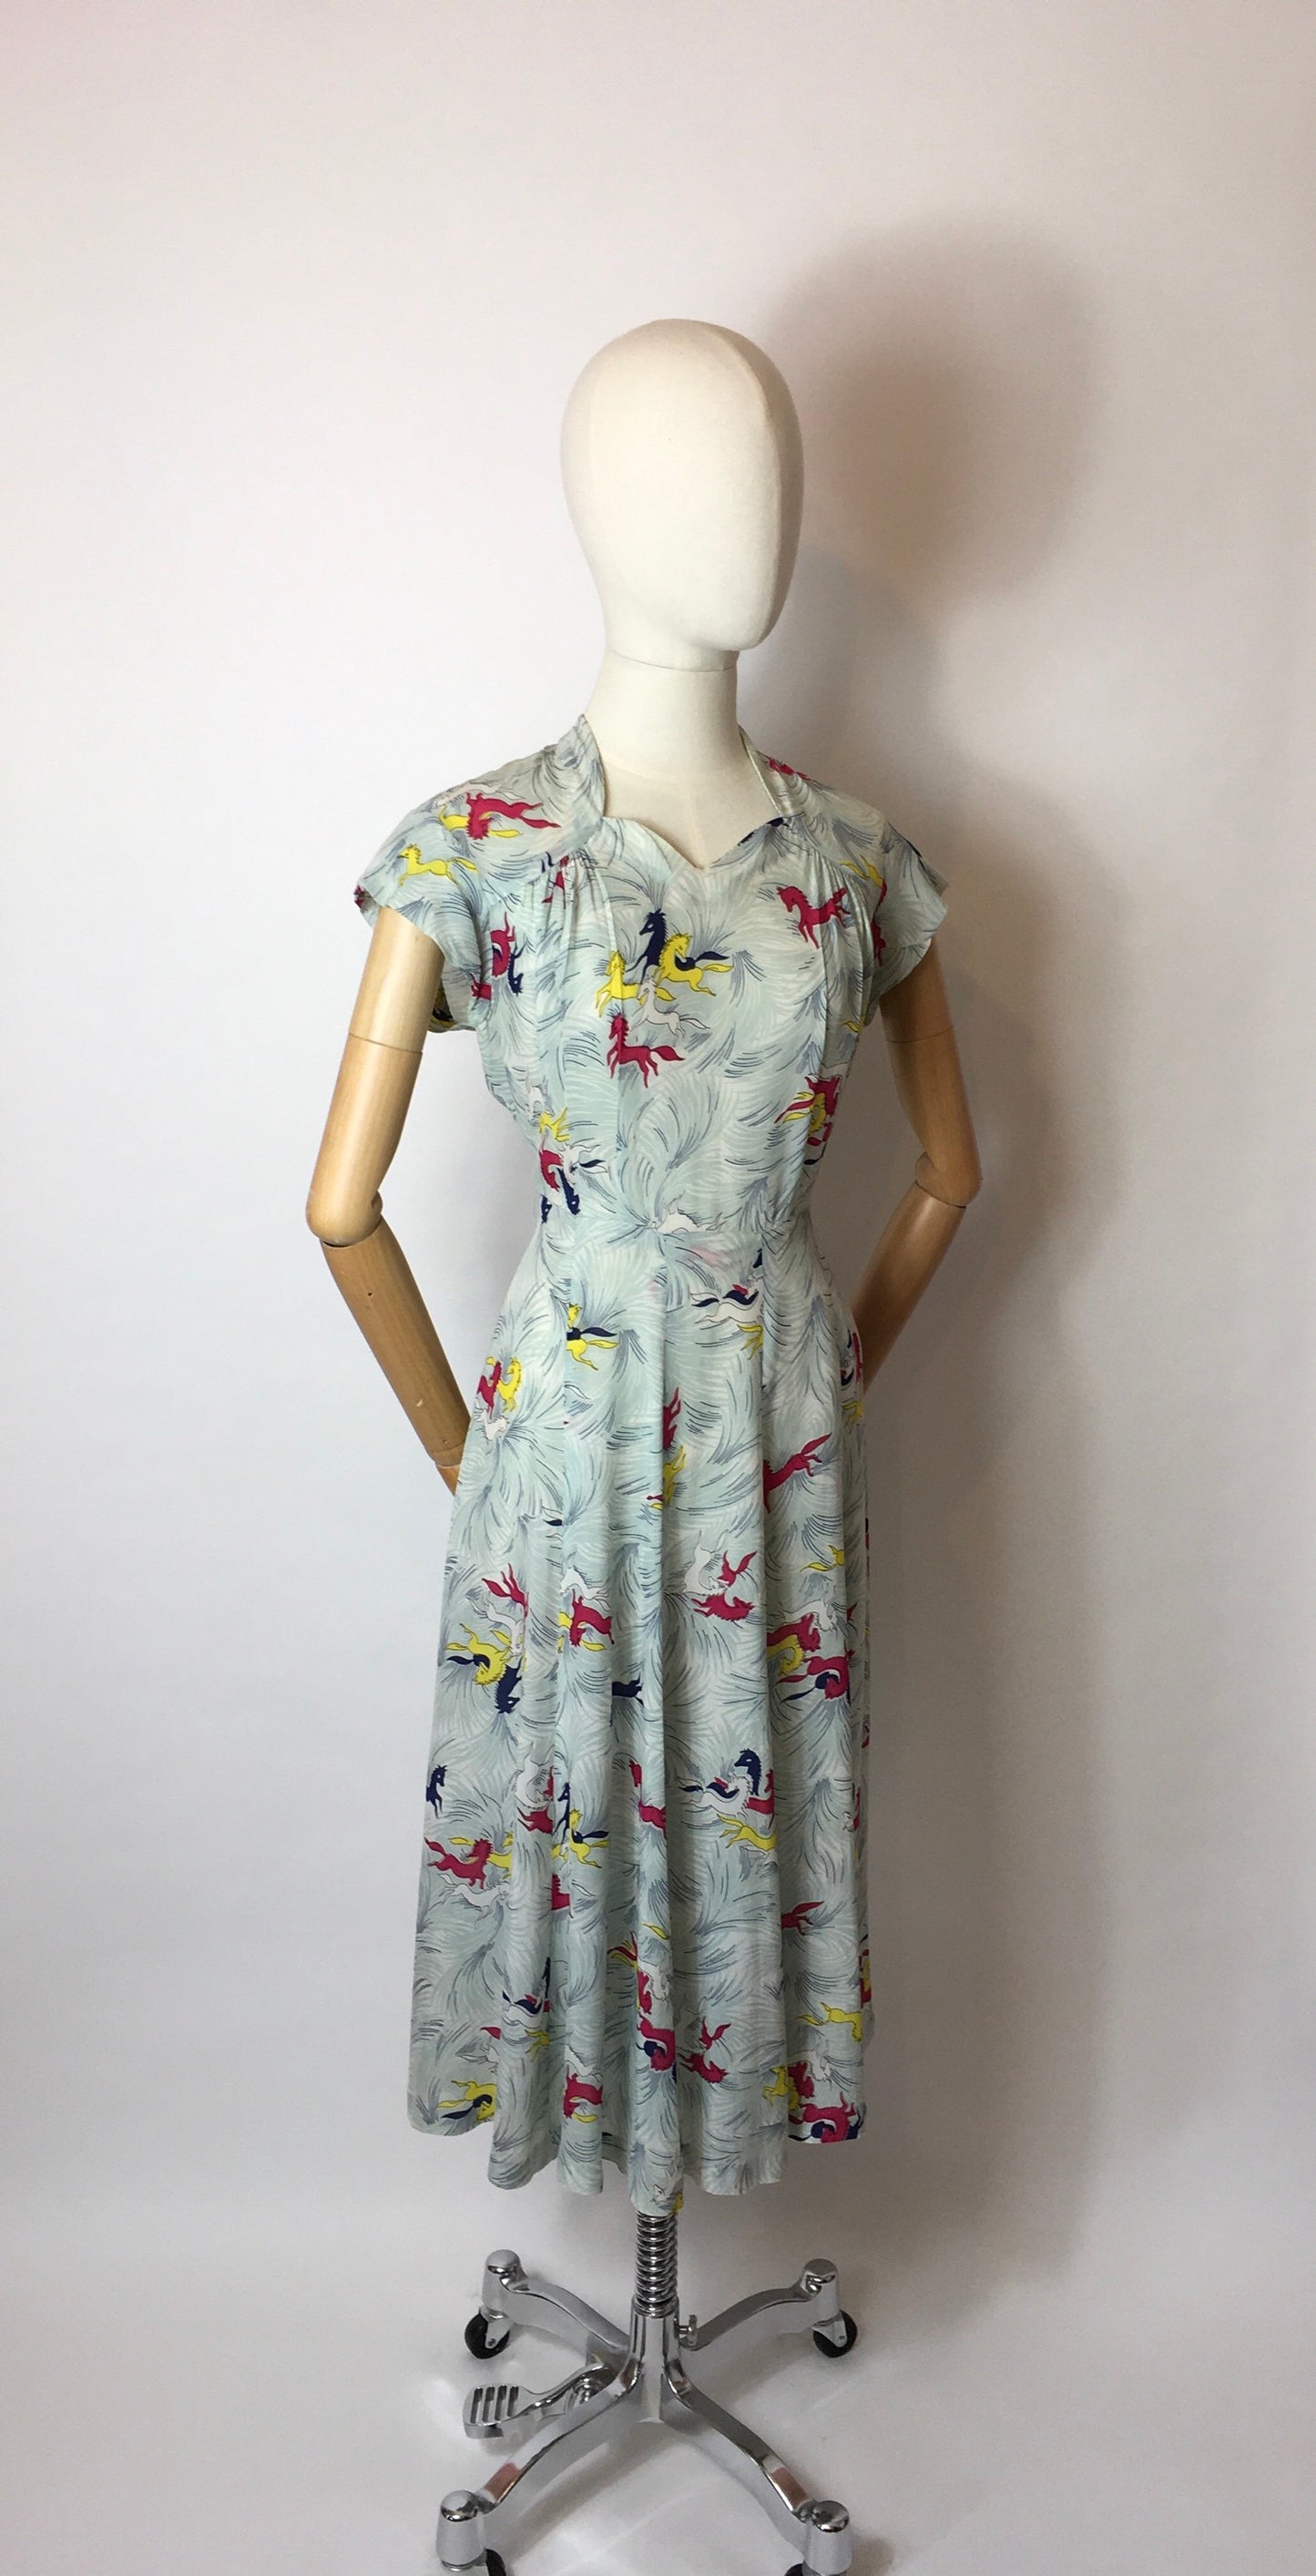 Original 1940’s Dancing Horses Print Dress - In a lovely Sheer Rayon Fabric